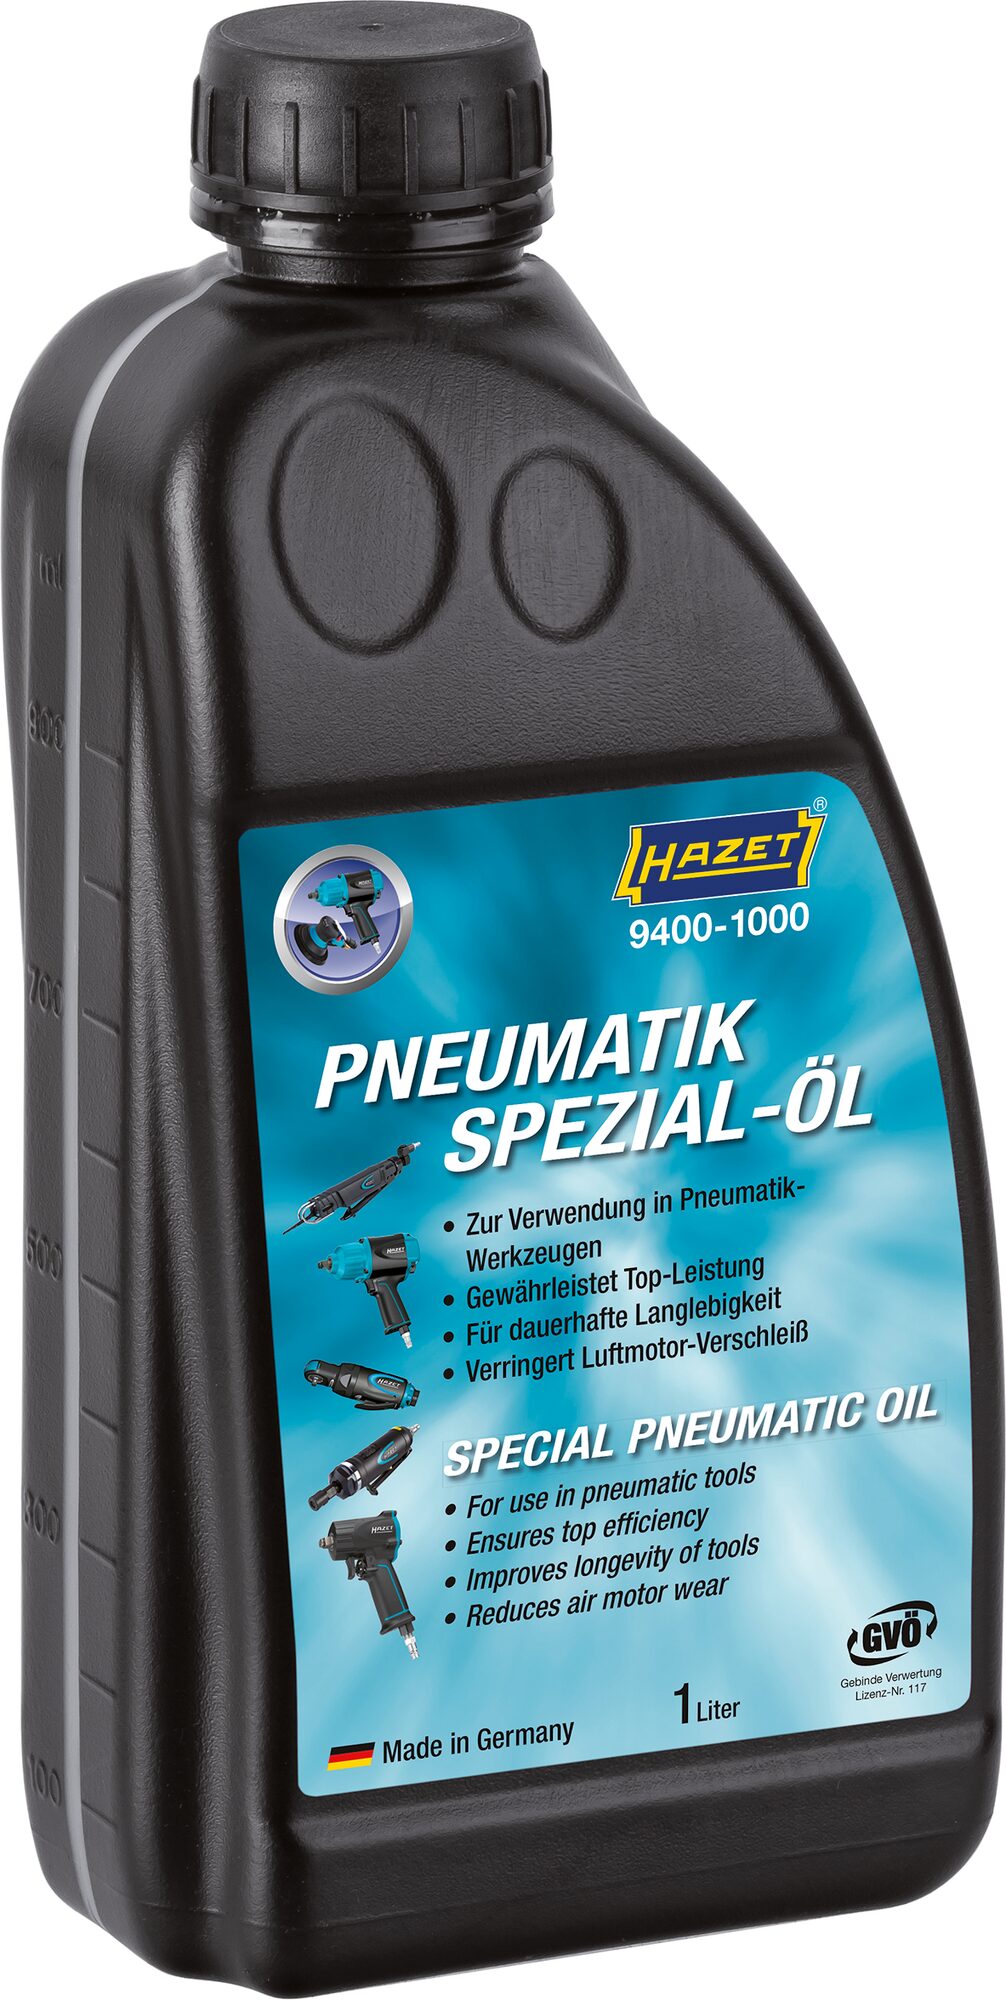 HAZET Pneumatik Spezial-Öl · 1000 ml 9400-1000